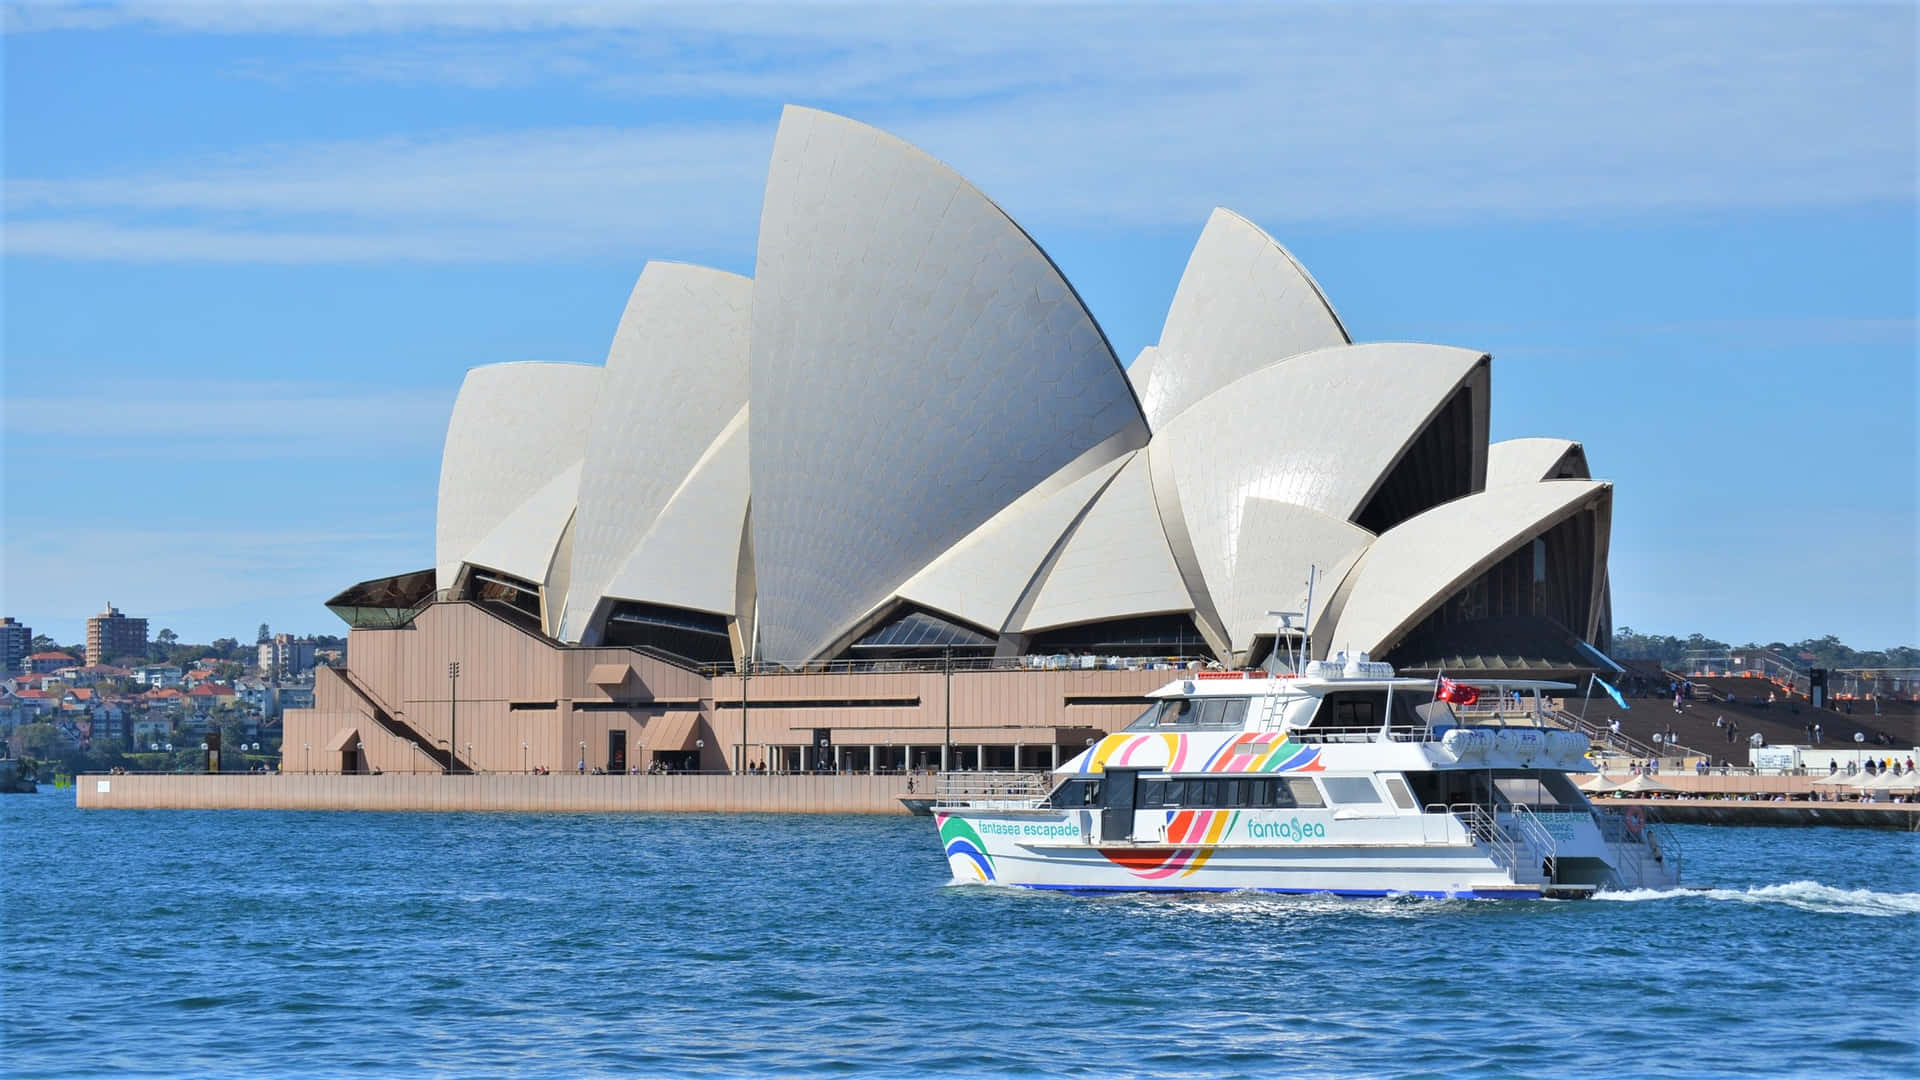 Sydney Opera Houseand Harbour Cruise Boat.jpg Wallpaper